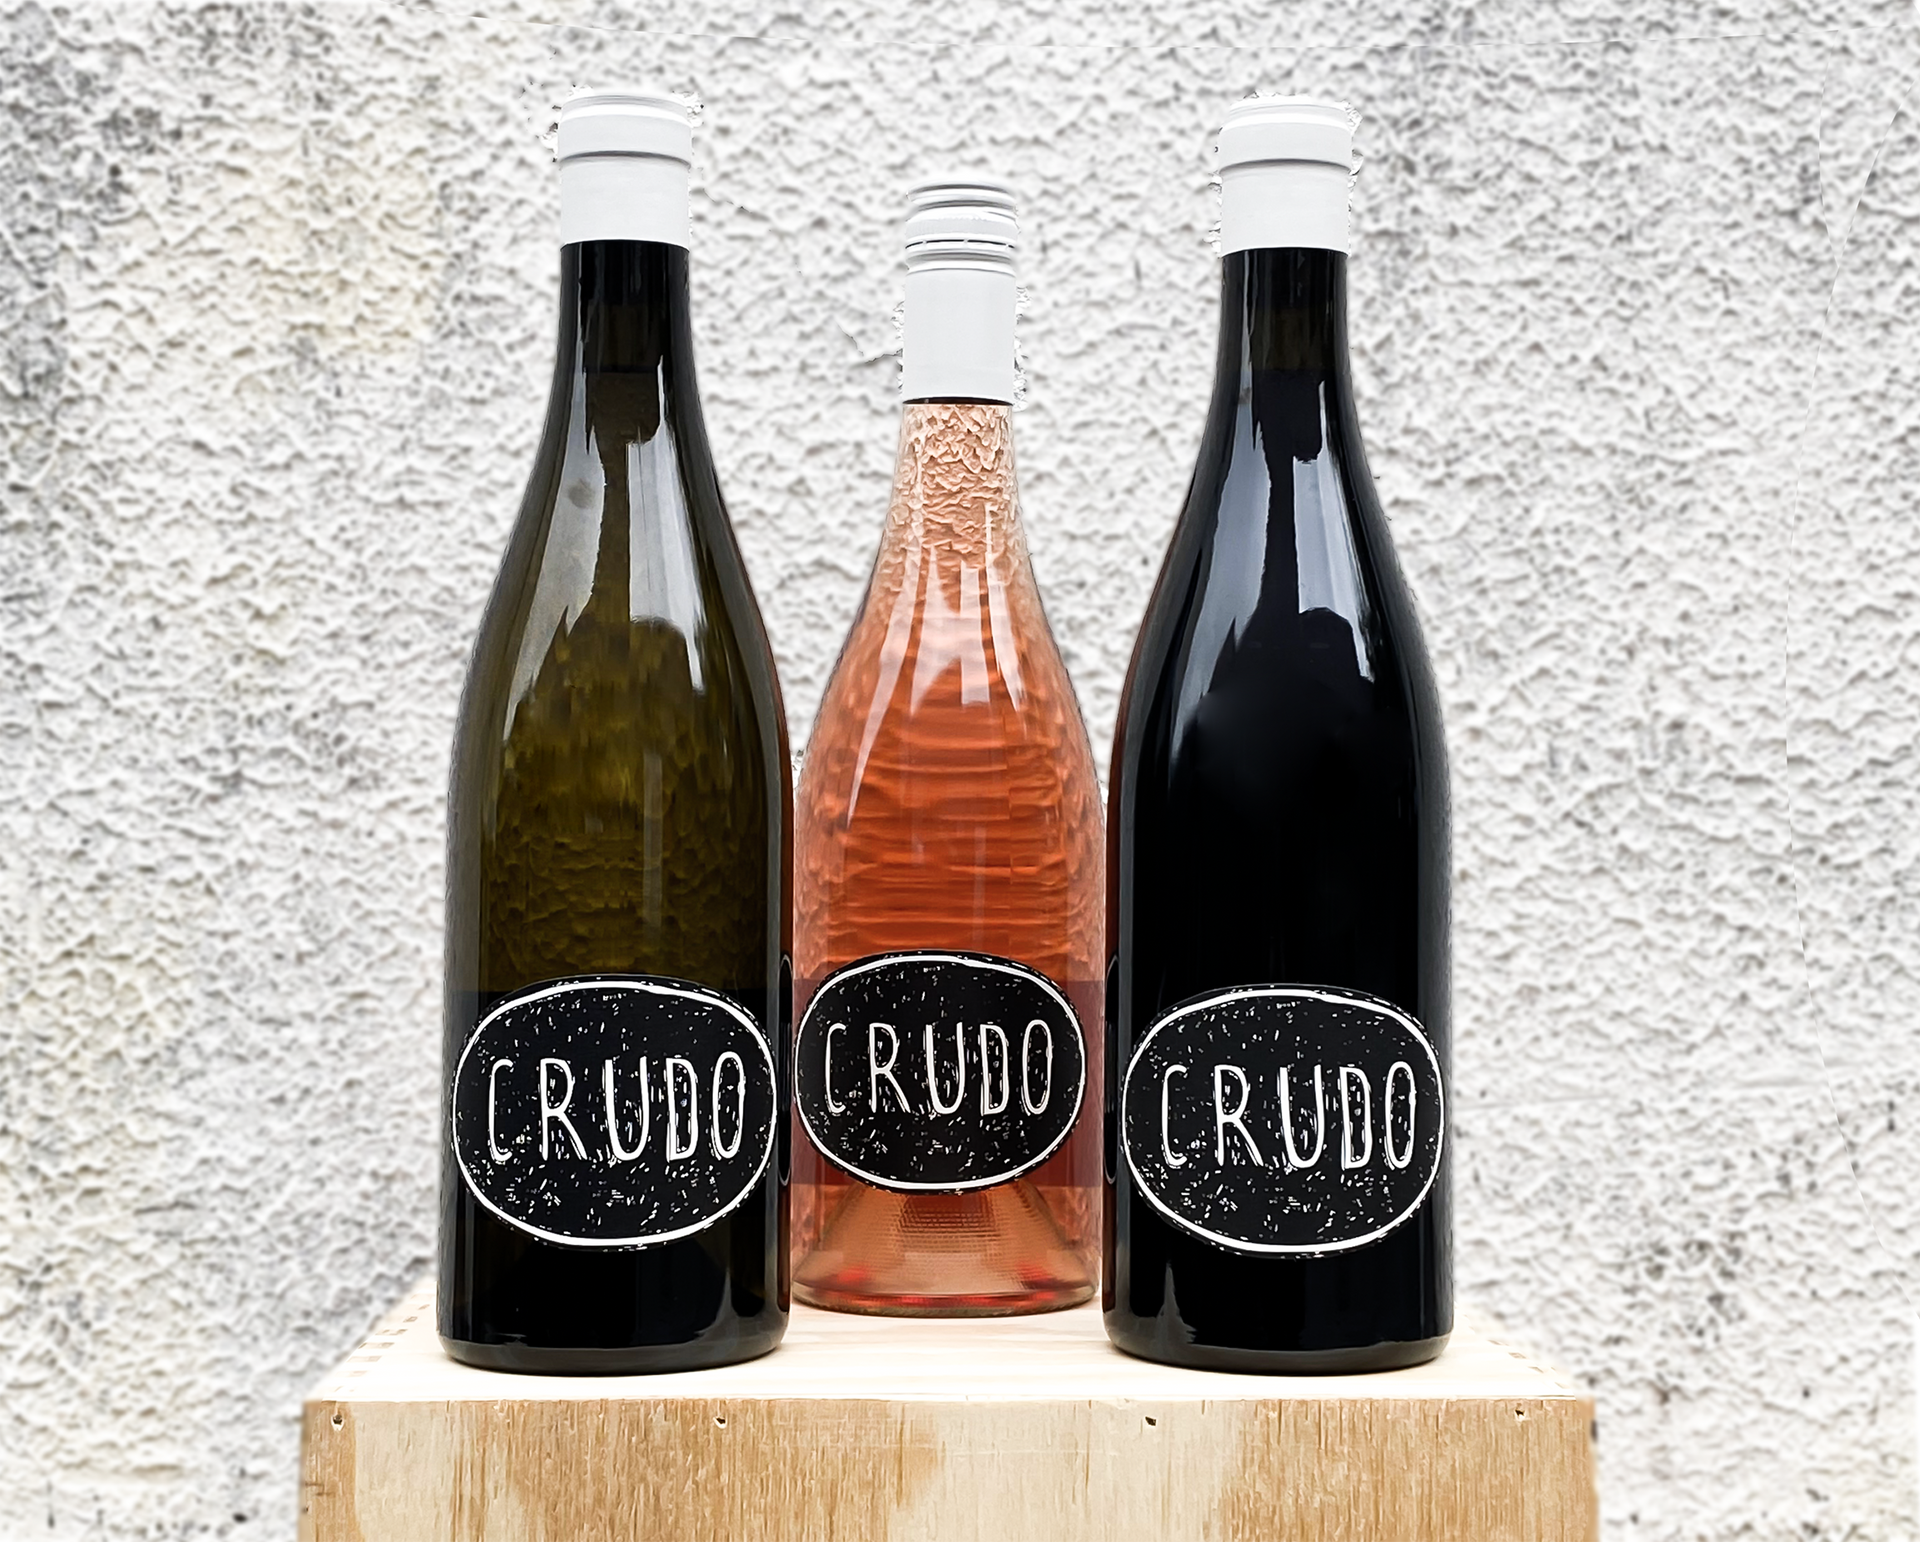 Another Level: “The Best Crudo Wines We’ve Ever Made” [Luke Lambert]